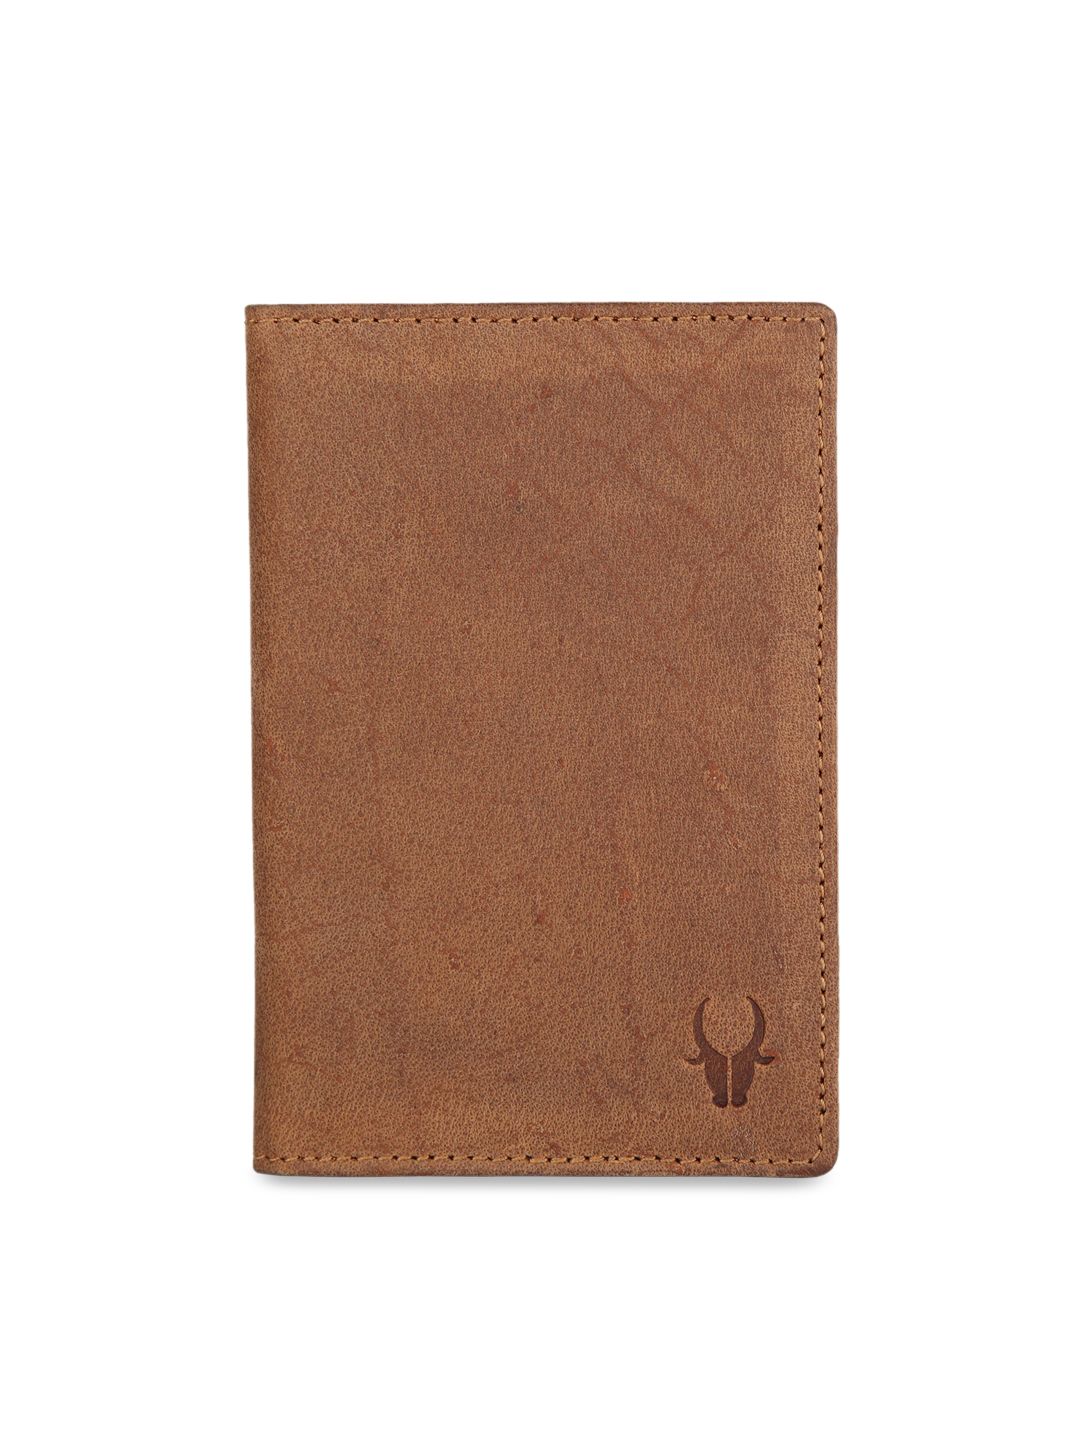 WildHorn Unisex Tan Brown Solid Leather Passport Holder Price in India